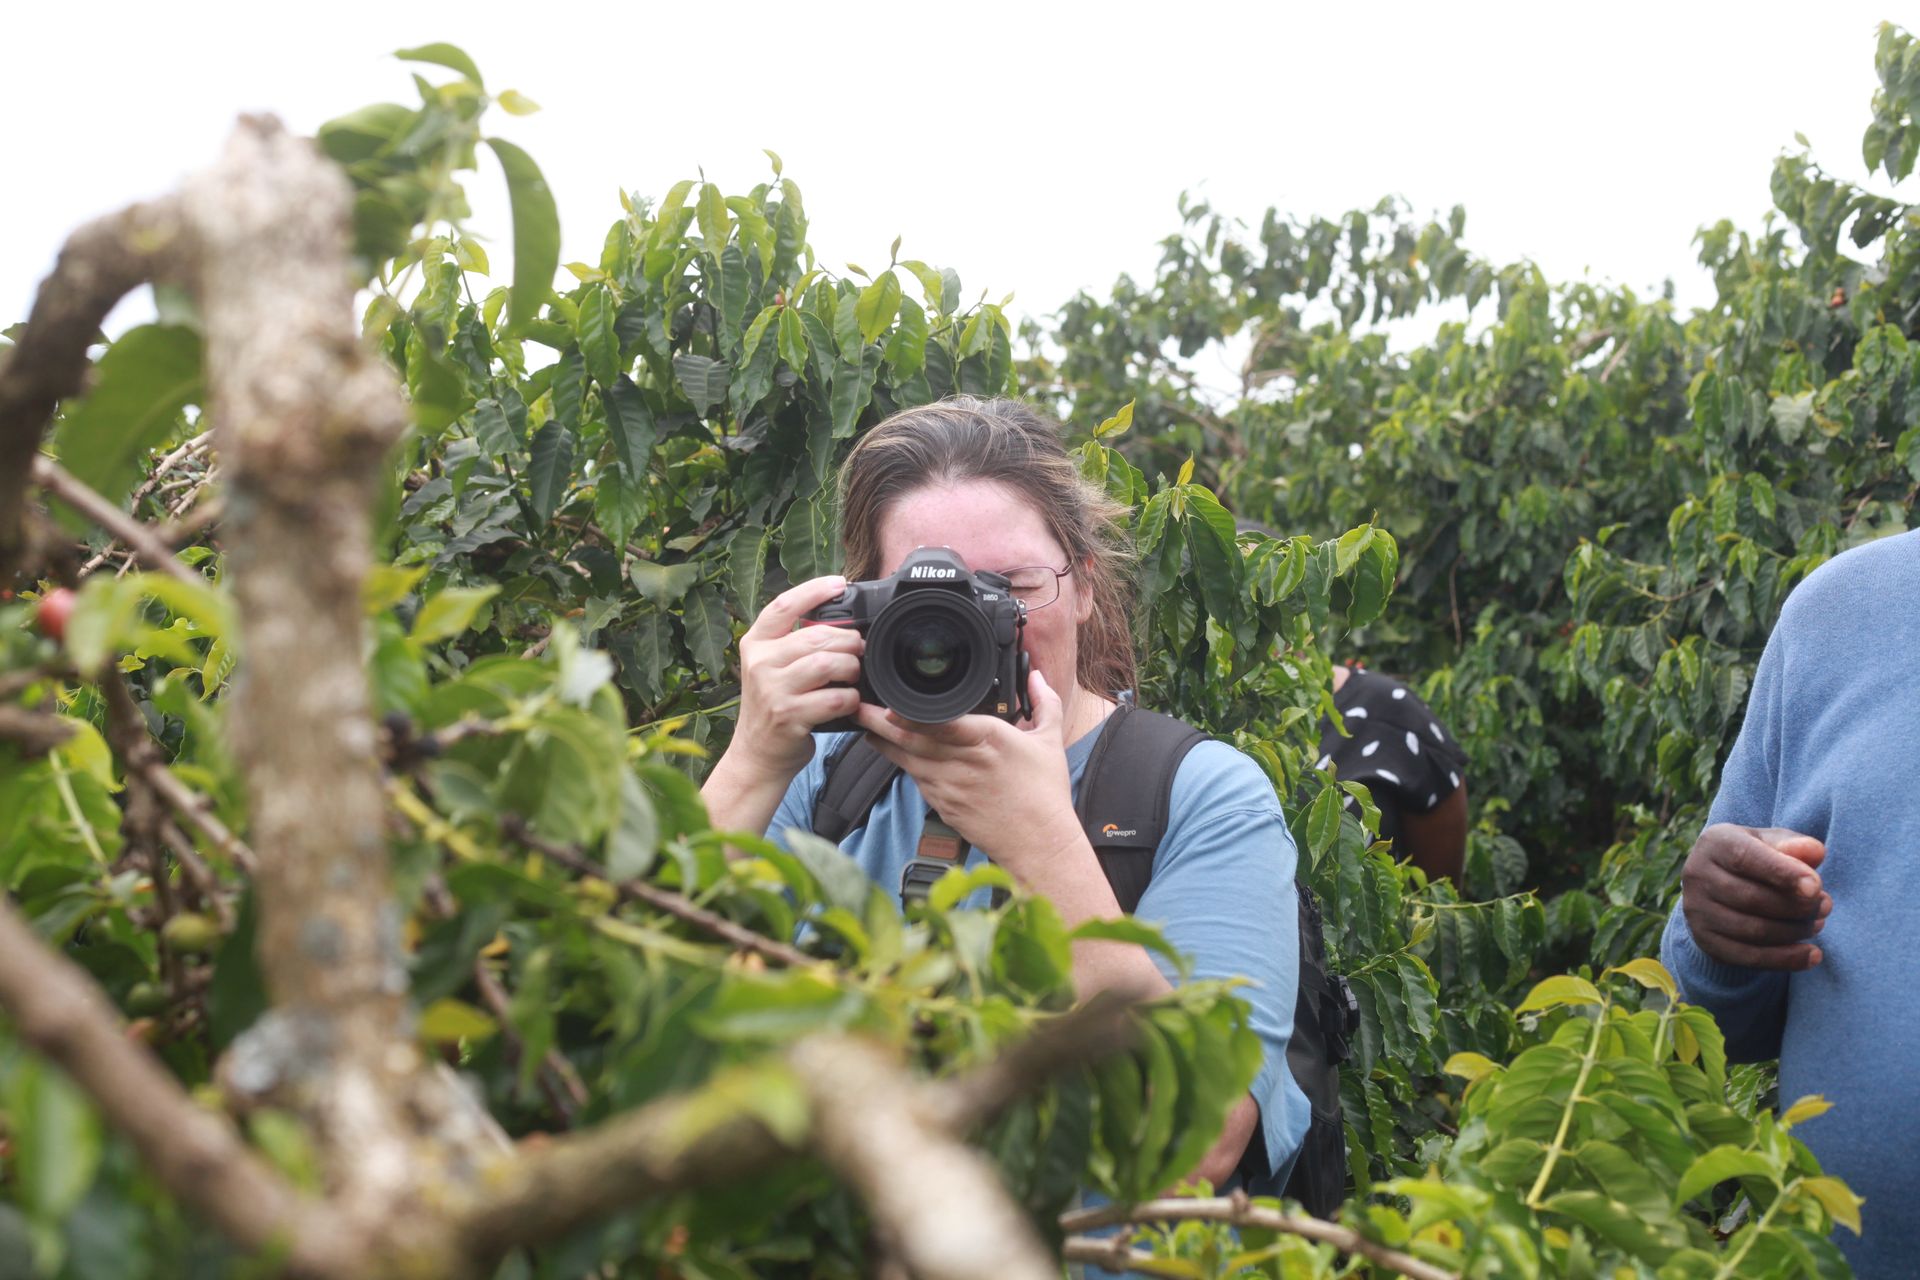 Kenya Specialty coffee farm story behind a camera lenses.